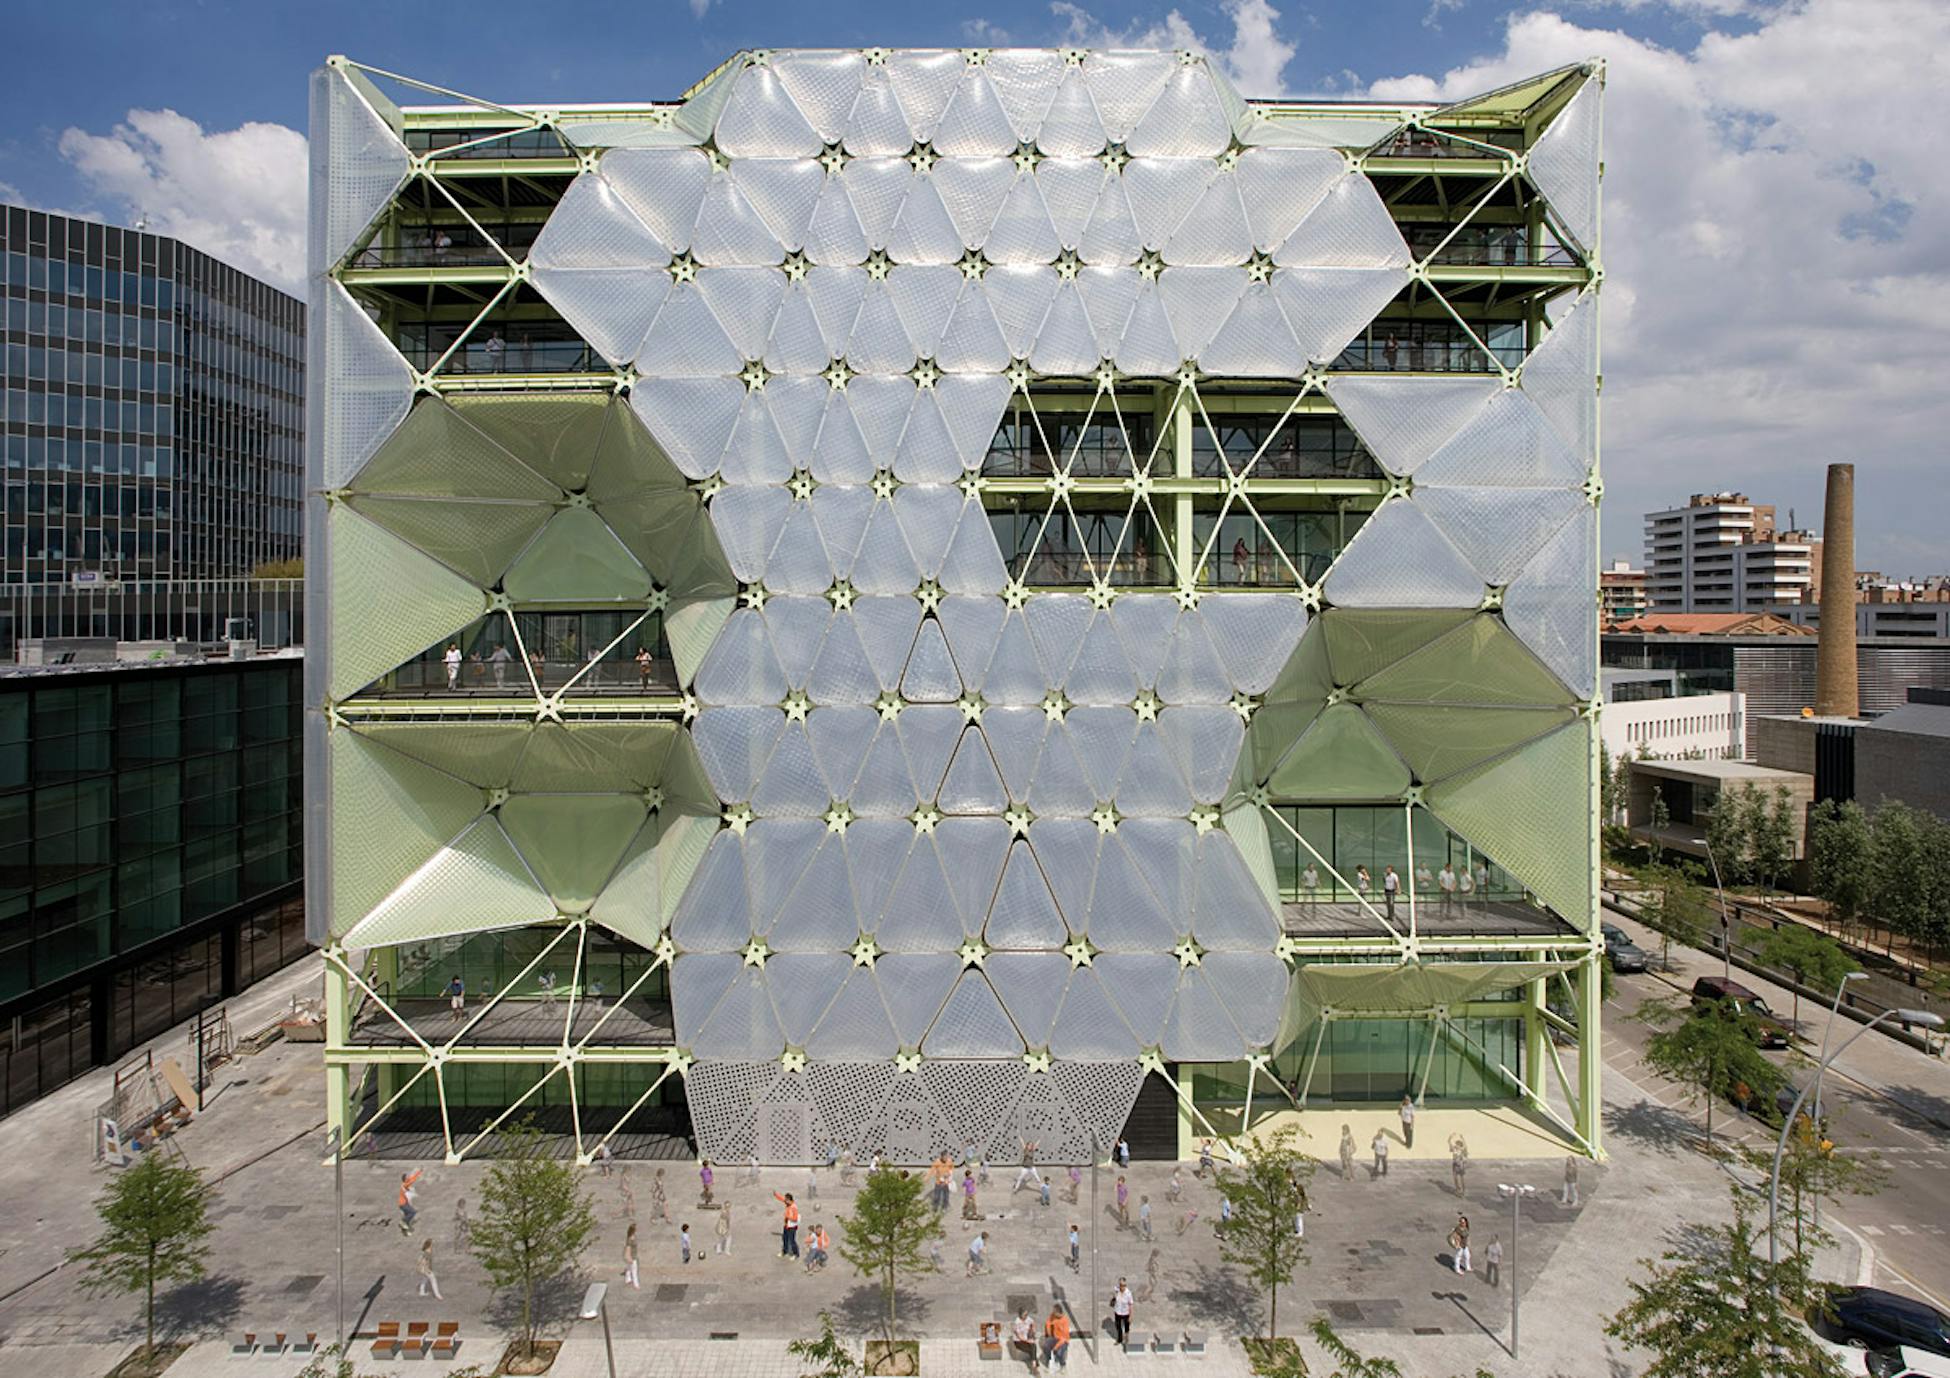 New two build. ETFE архитектура. Павильон Endesa, Барселона. Media Tic в Барселоне. Фасад аэропорта Брисбена.